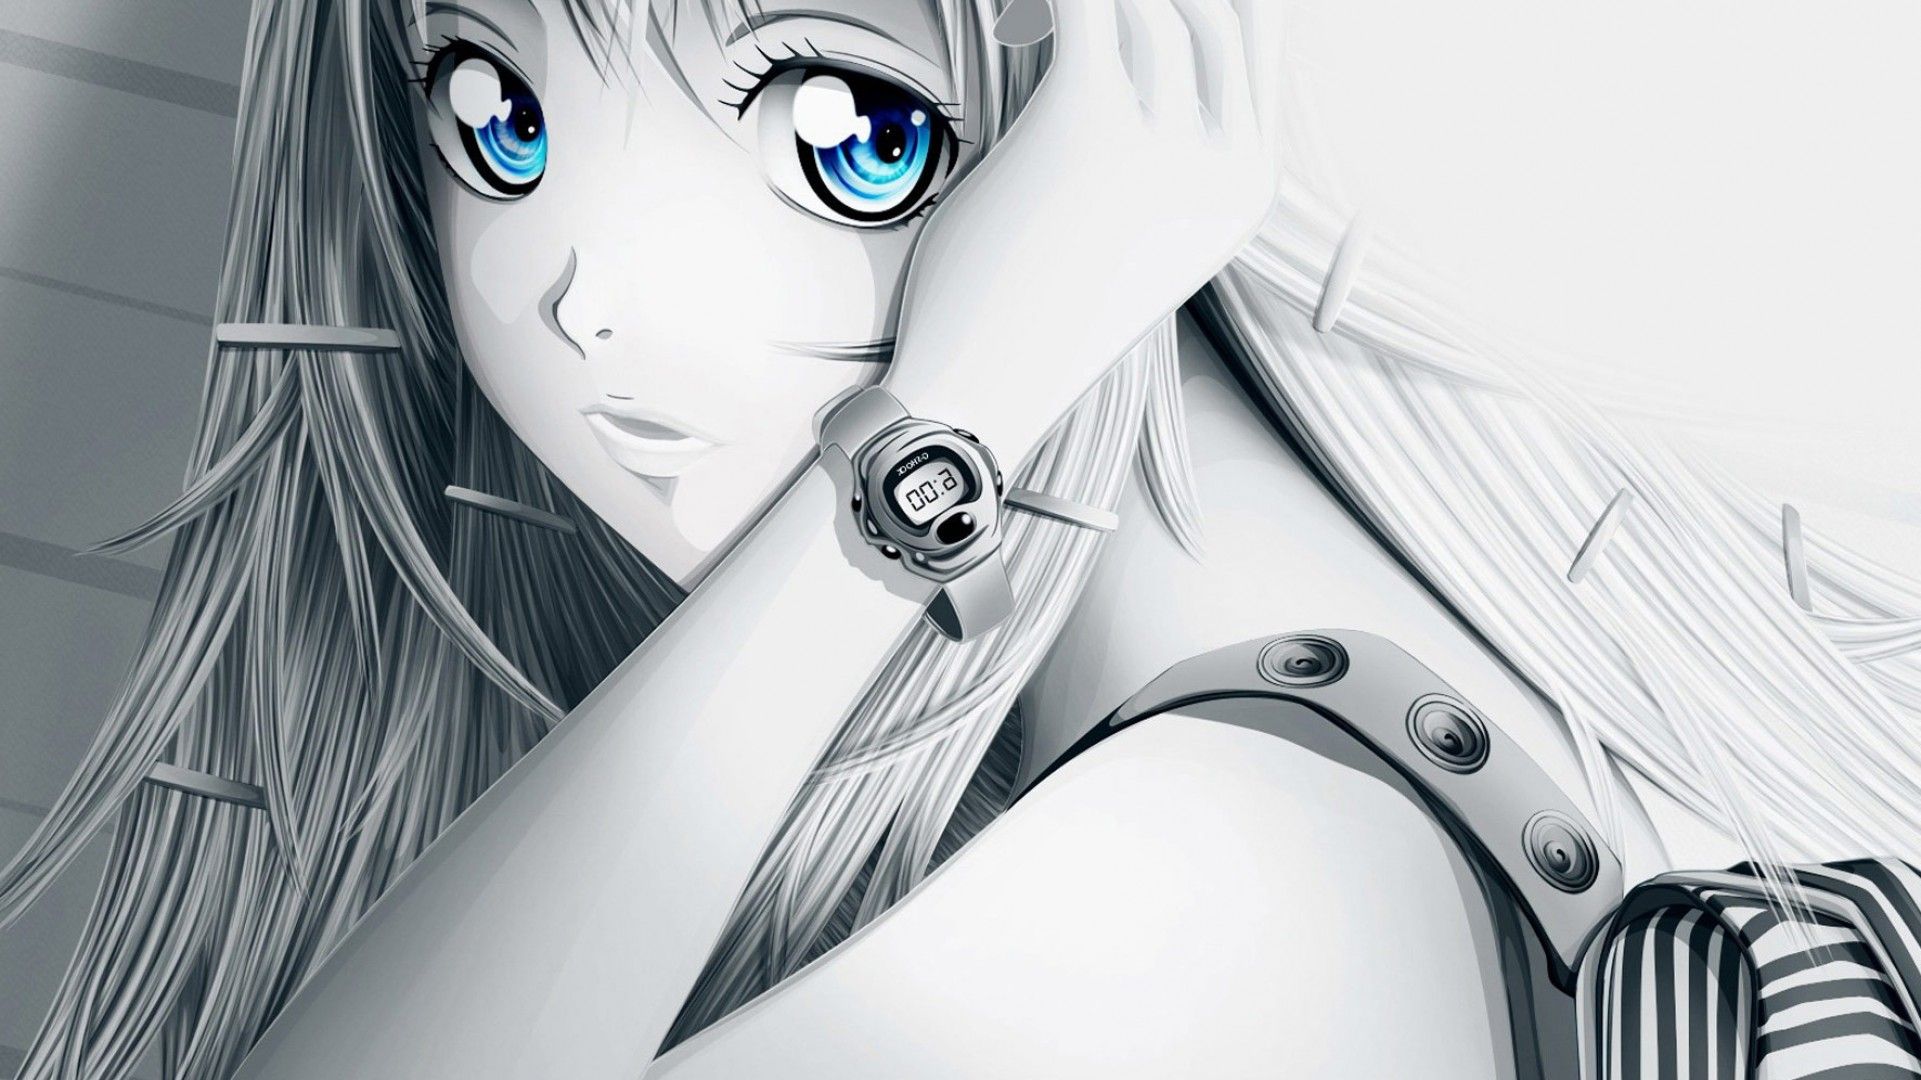 Free download Download Cute Anime Girl Desktop Wallpaper Get